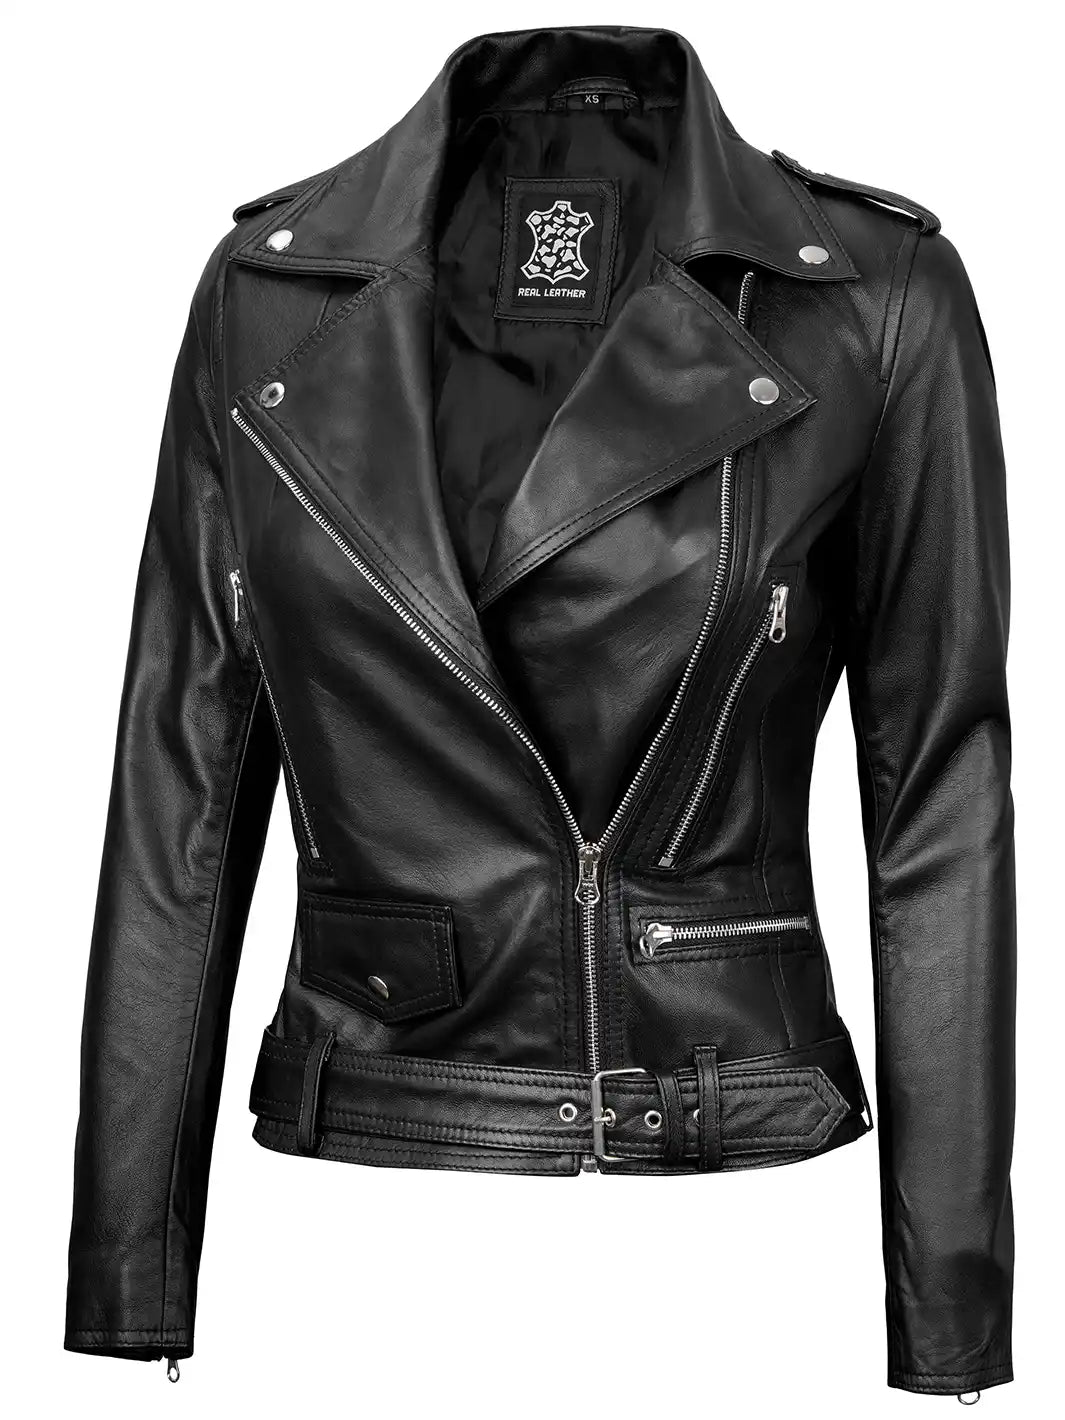 Womens leather motorcyclejacket